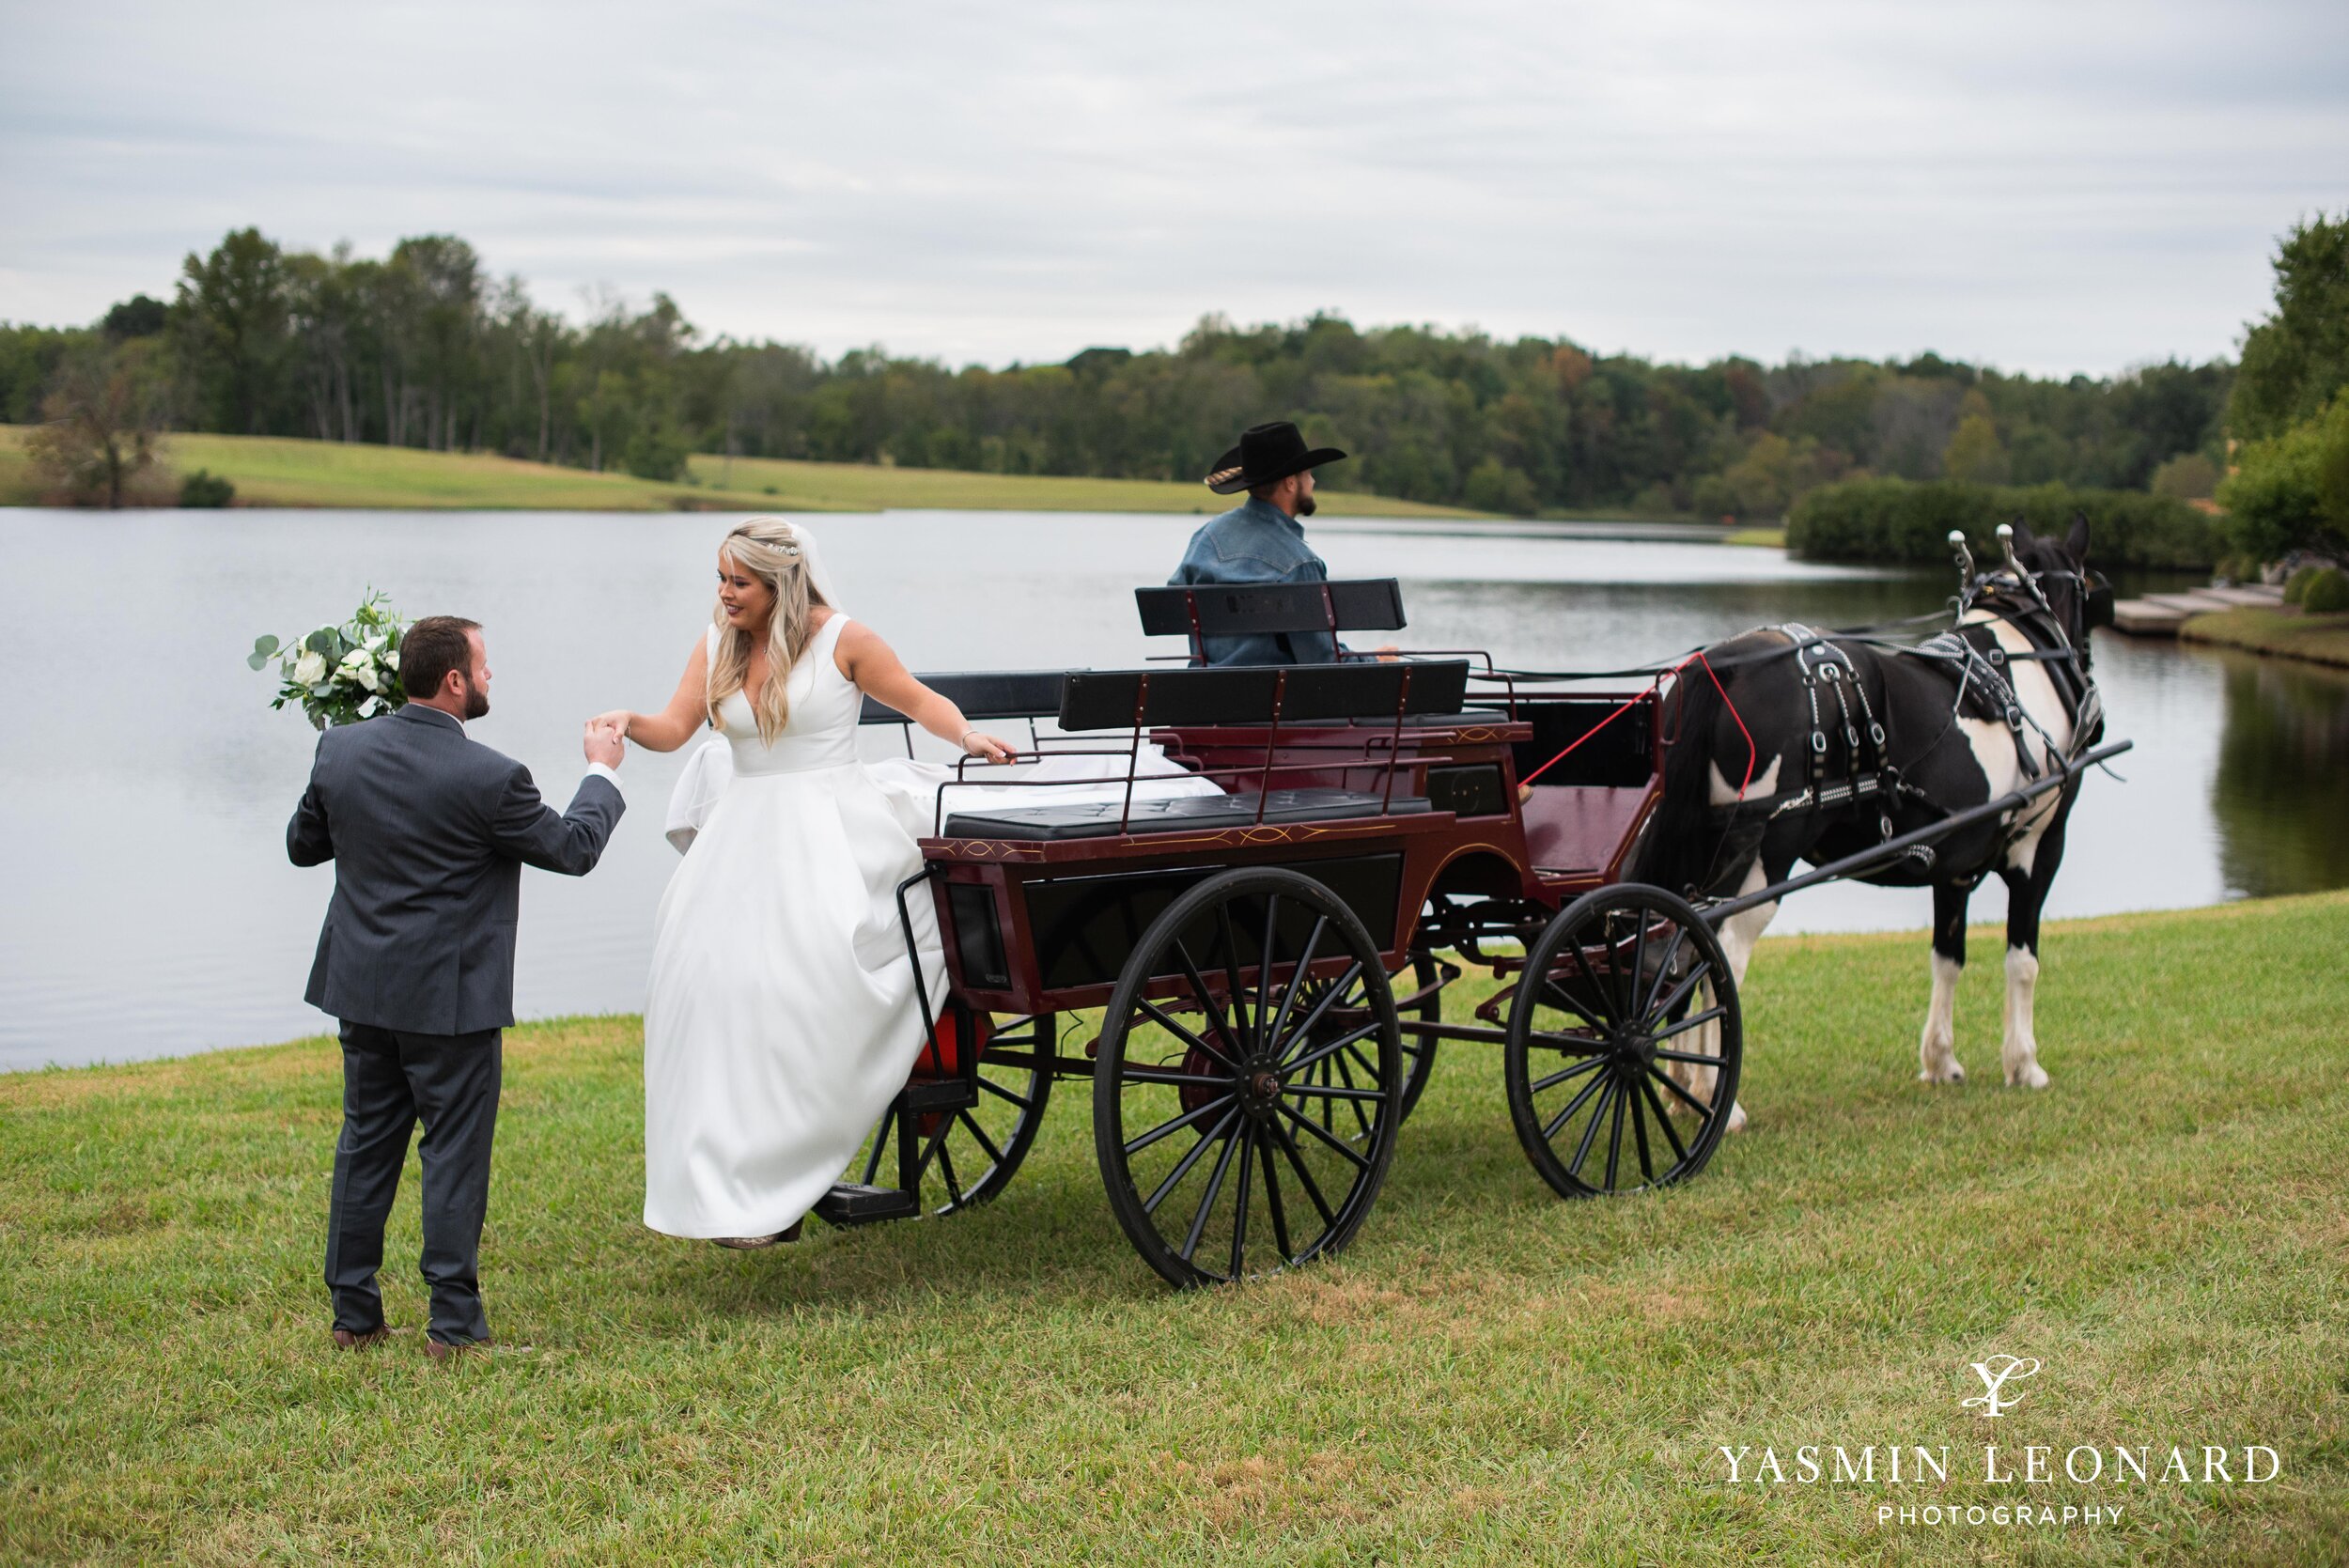 Dan and Nicole - October 5, 2019 - Adaumont - Yasmin Leonard Photography - Horse Carriage Wedding - Adaumont Wedding - High Point Wedding Photographer - Fall Wedding - Fall Wedding Colors-36.jpg